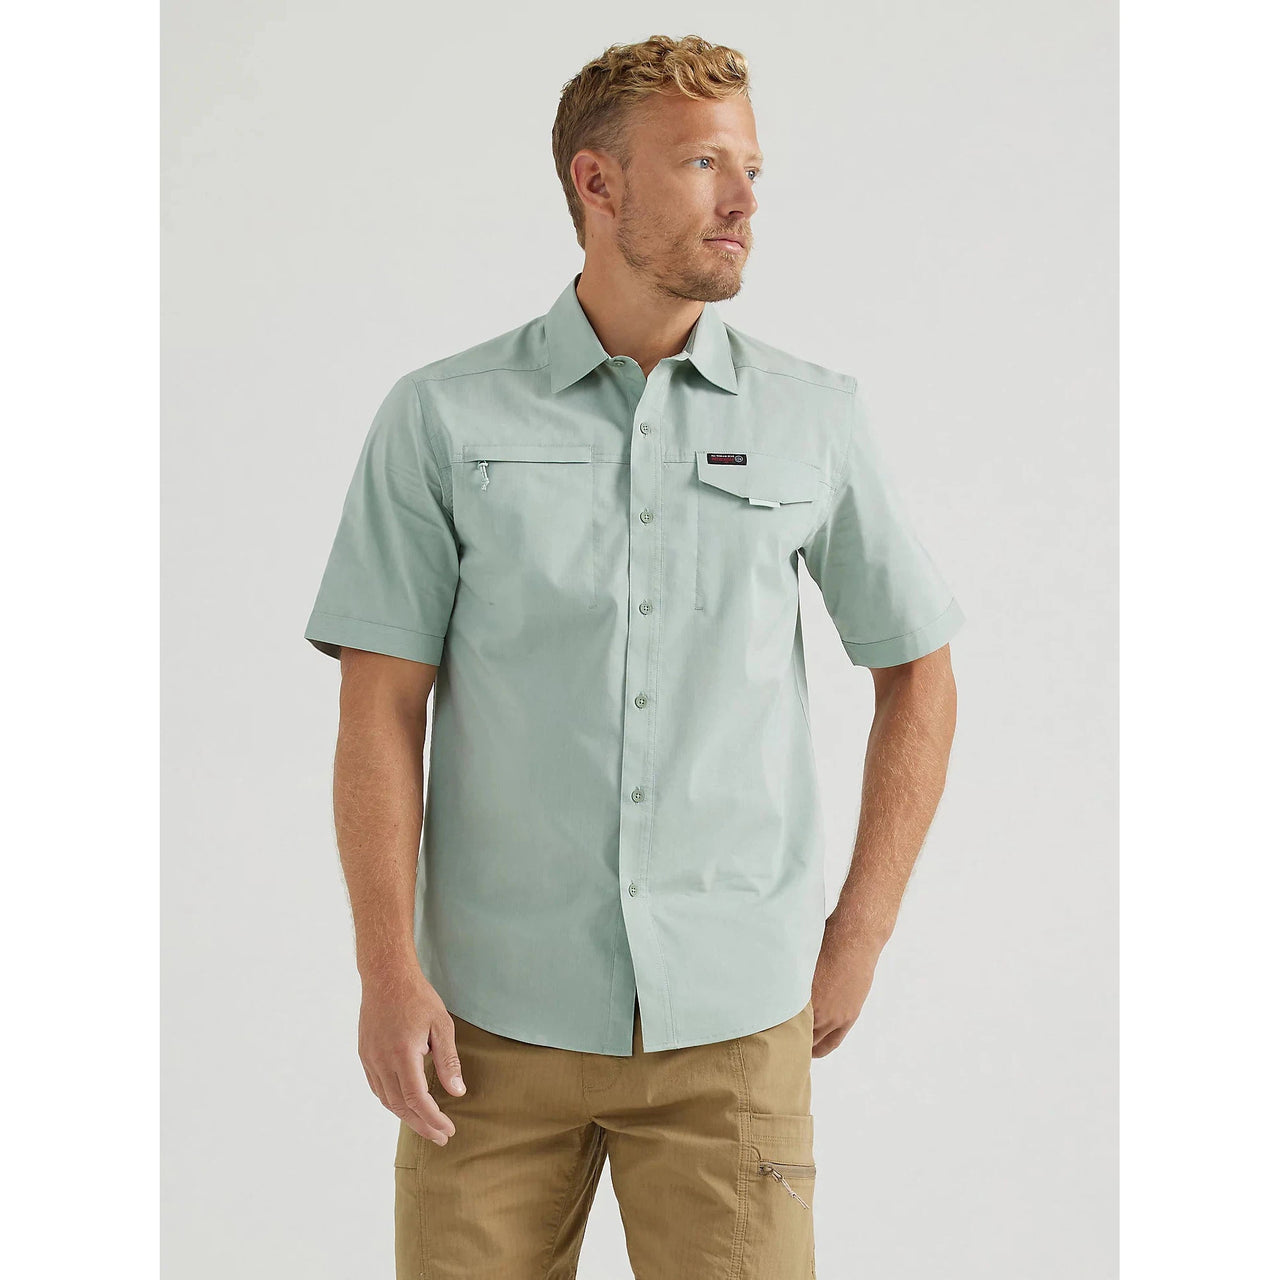 Wrangler Men's ATG Short Sleeve Asymmetric Zip Pocket Plaid Shirt - Green Bay